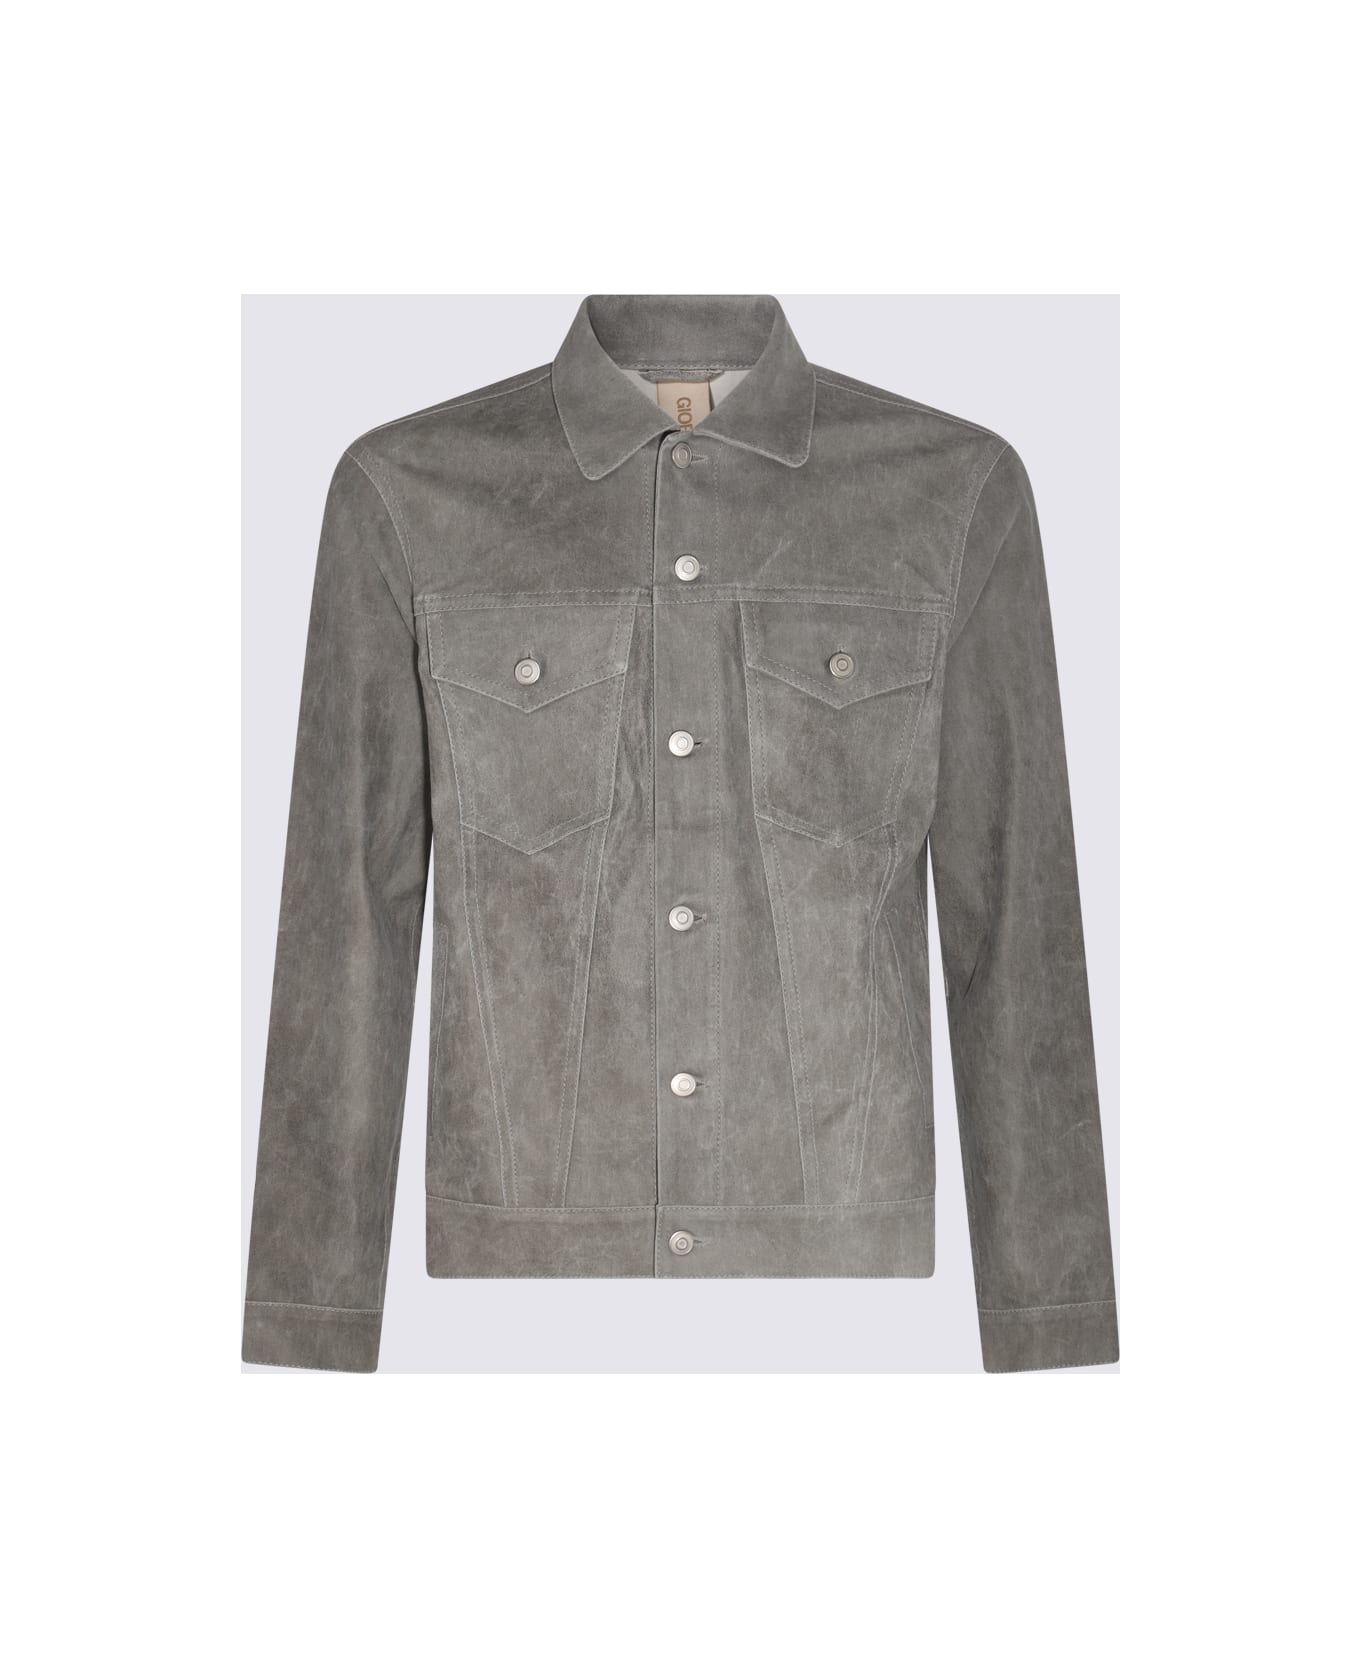 Giorgio Brato Grey Leather Jacket レザージャケット